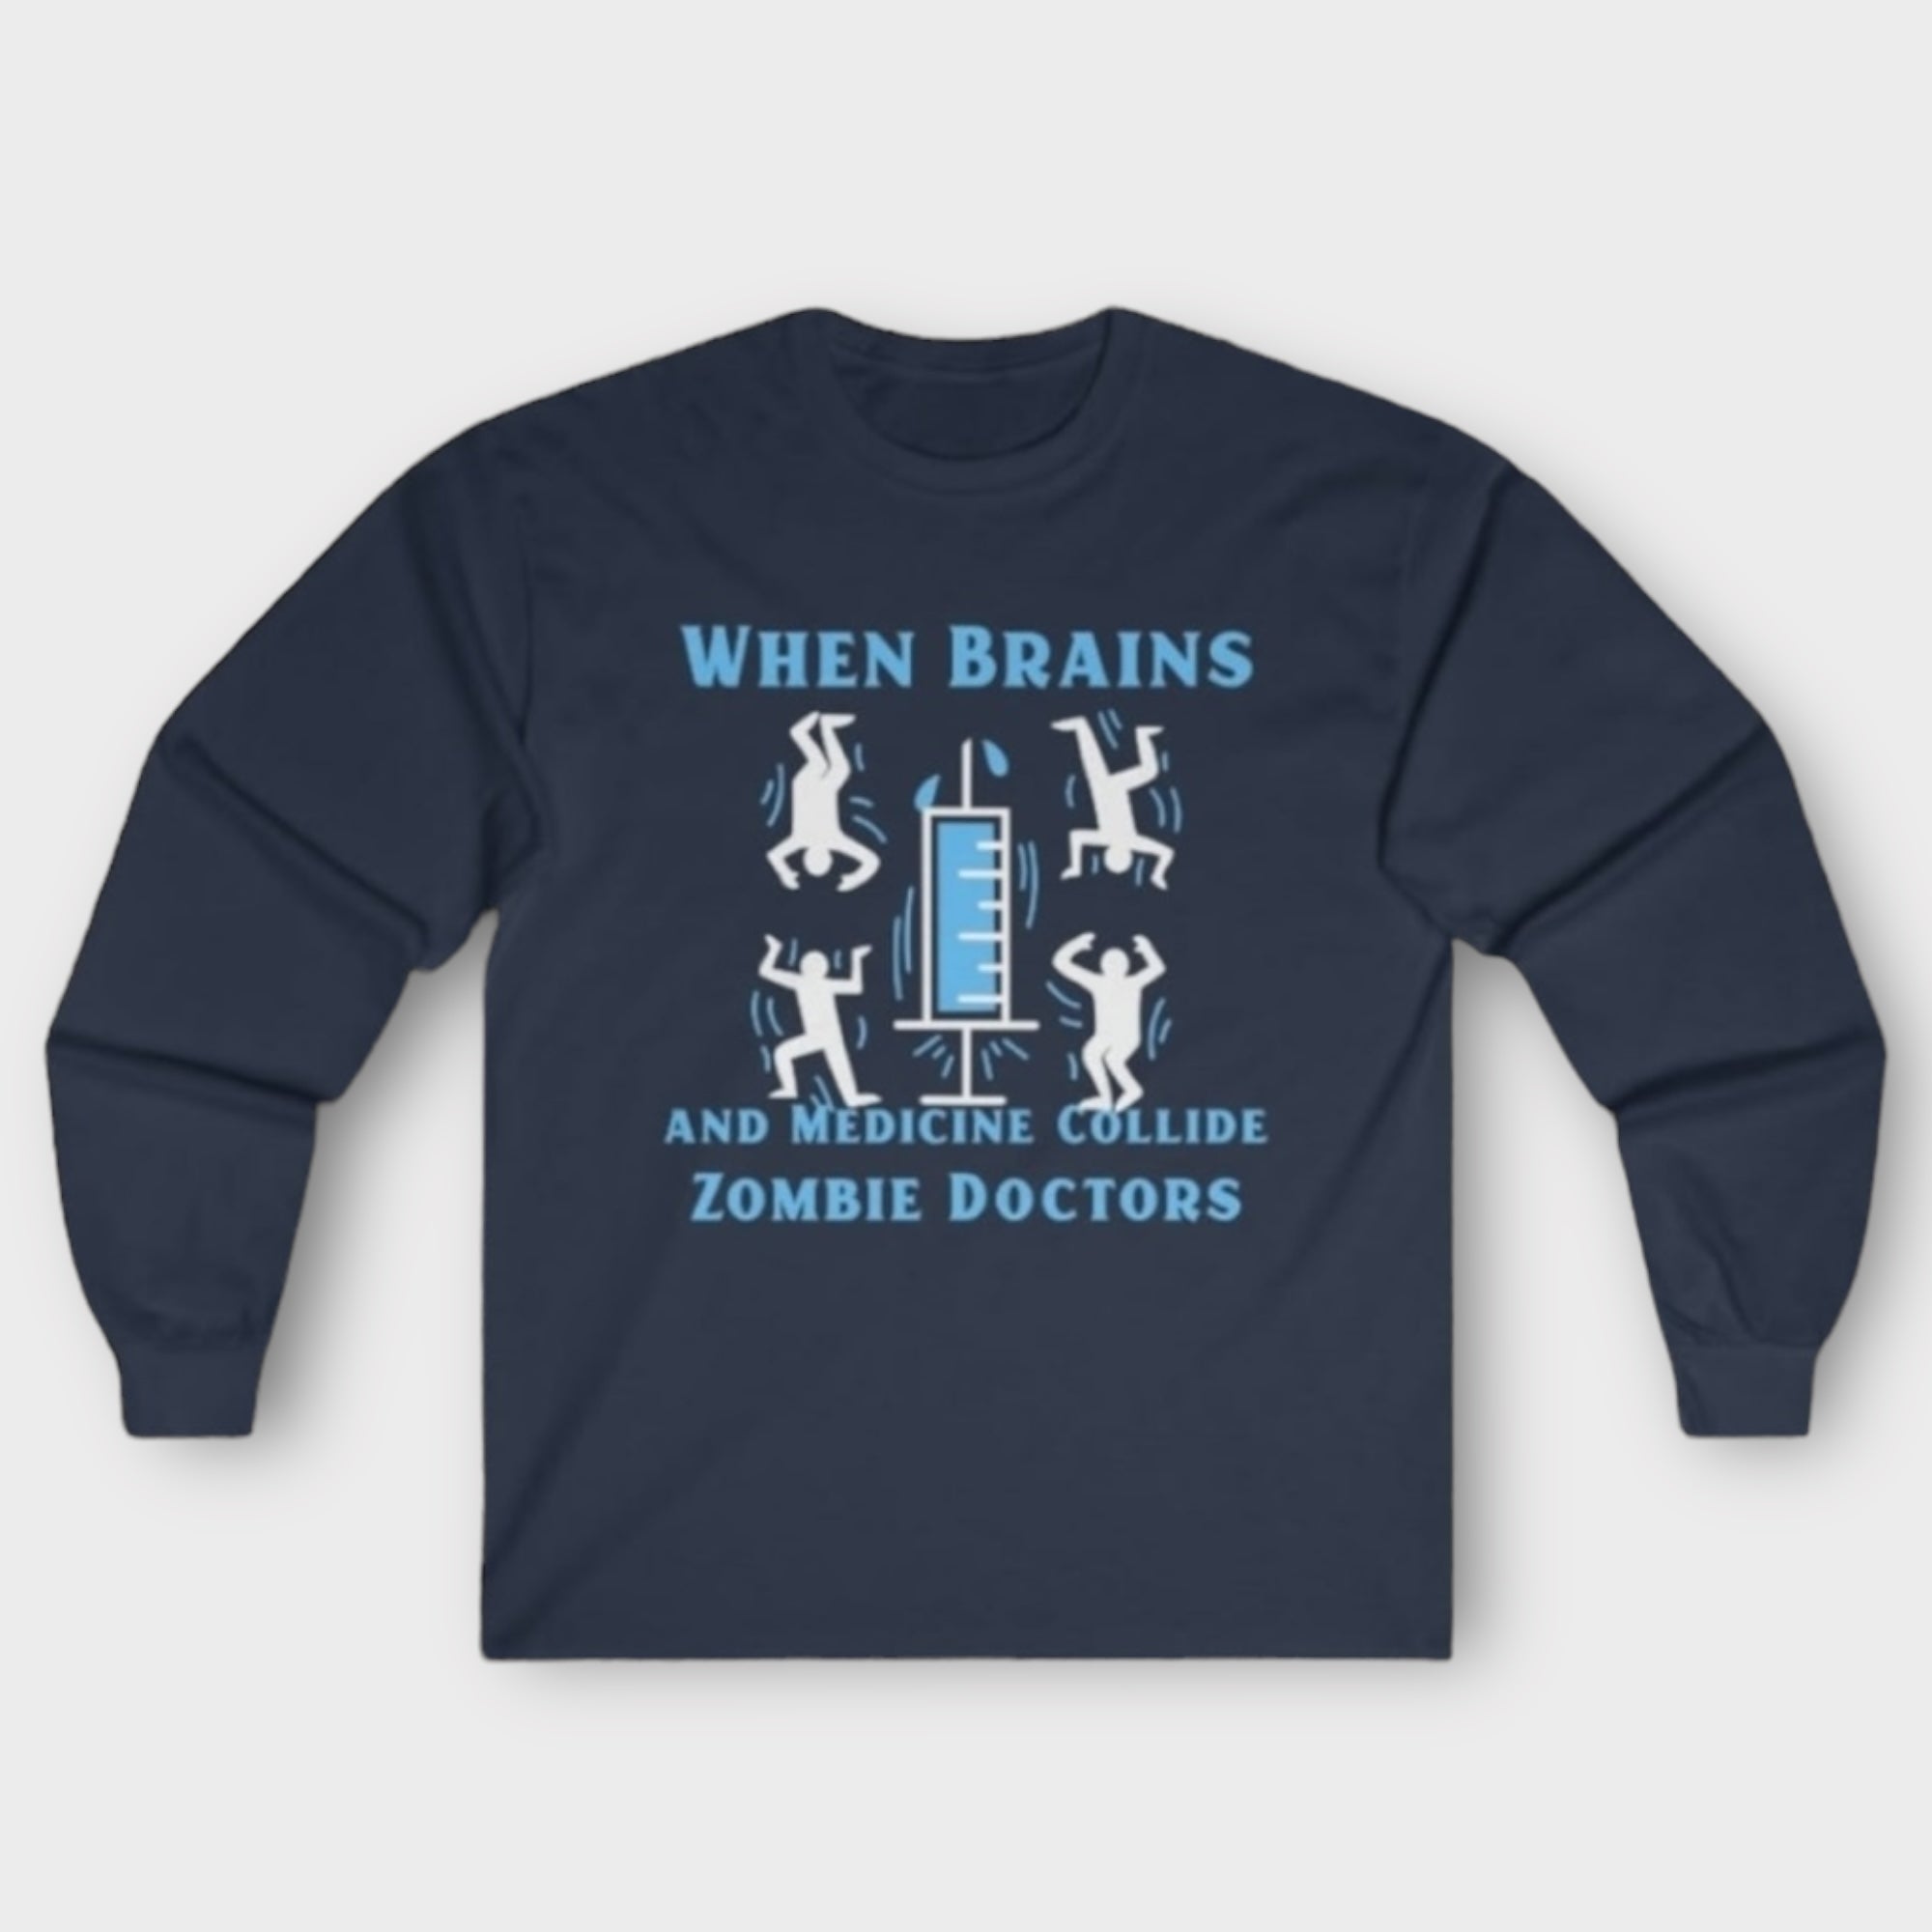 'UNM' Zombie doctor shirt for men